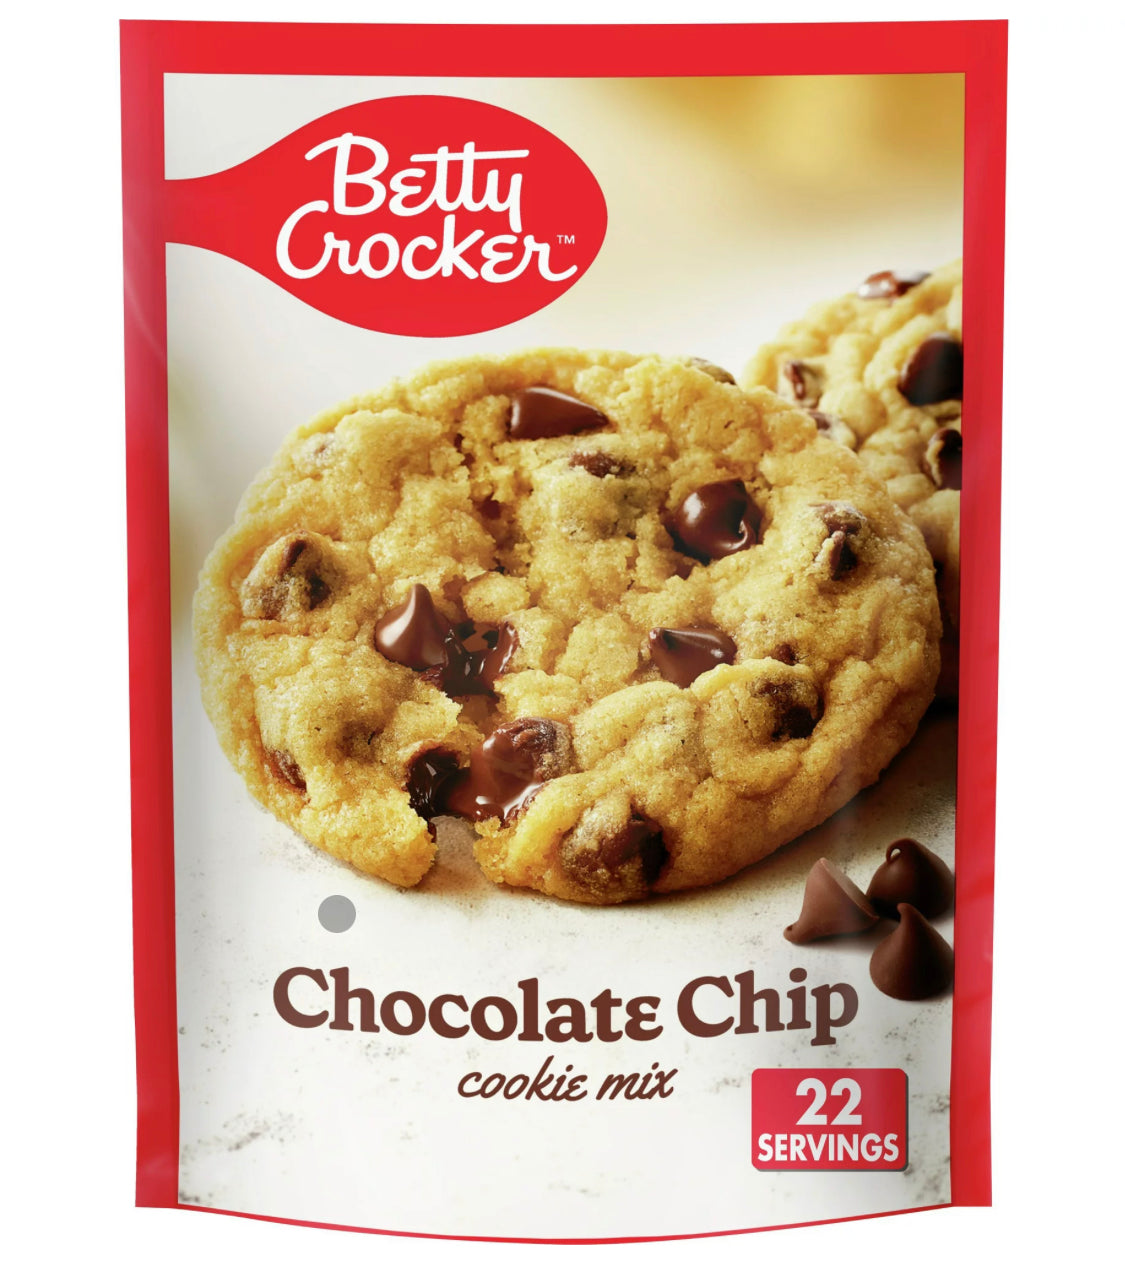 Betty Crocker Chocolate Chip Cookie Mix 17.5oz